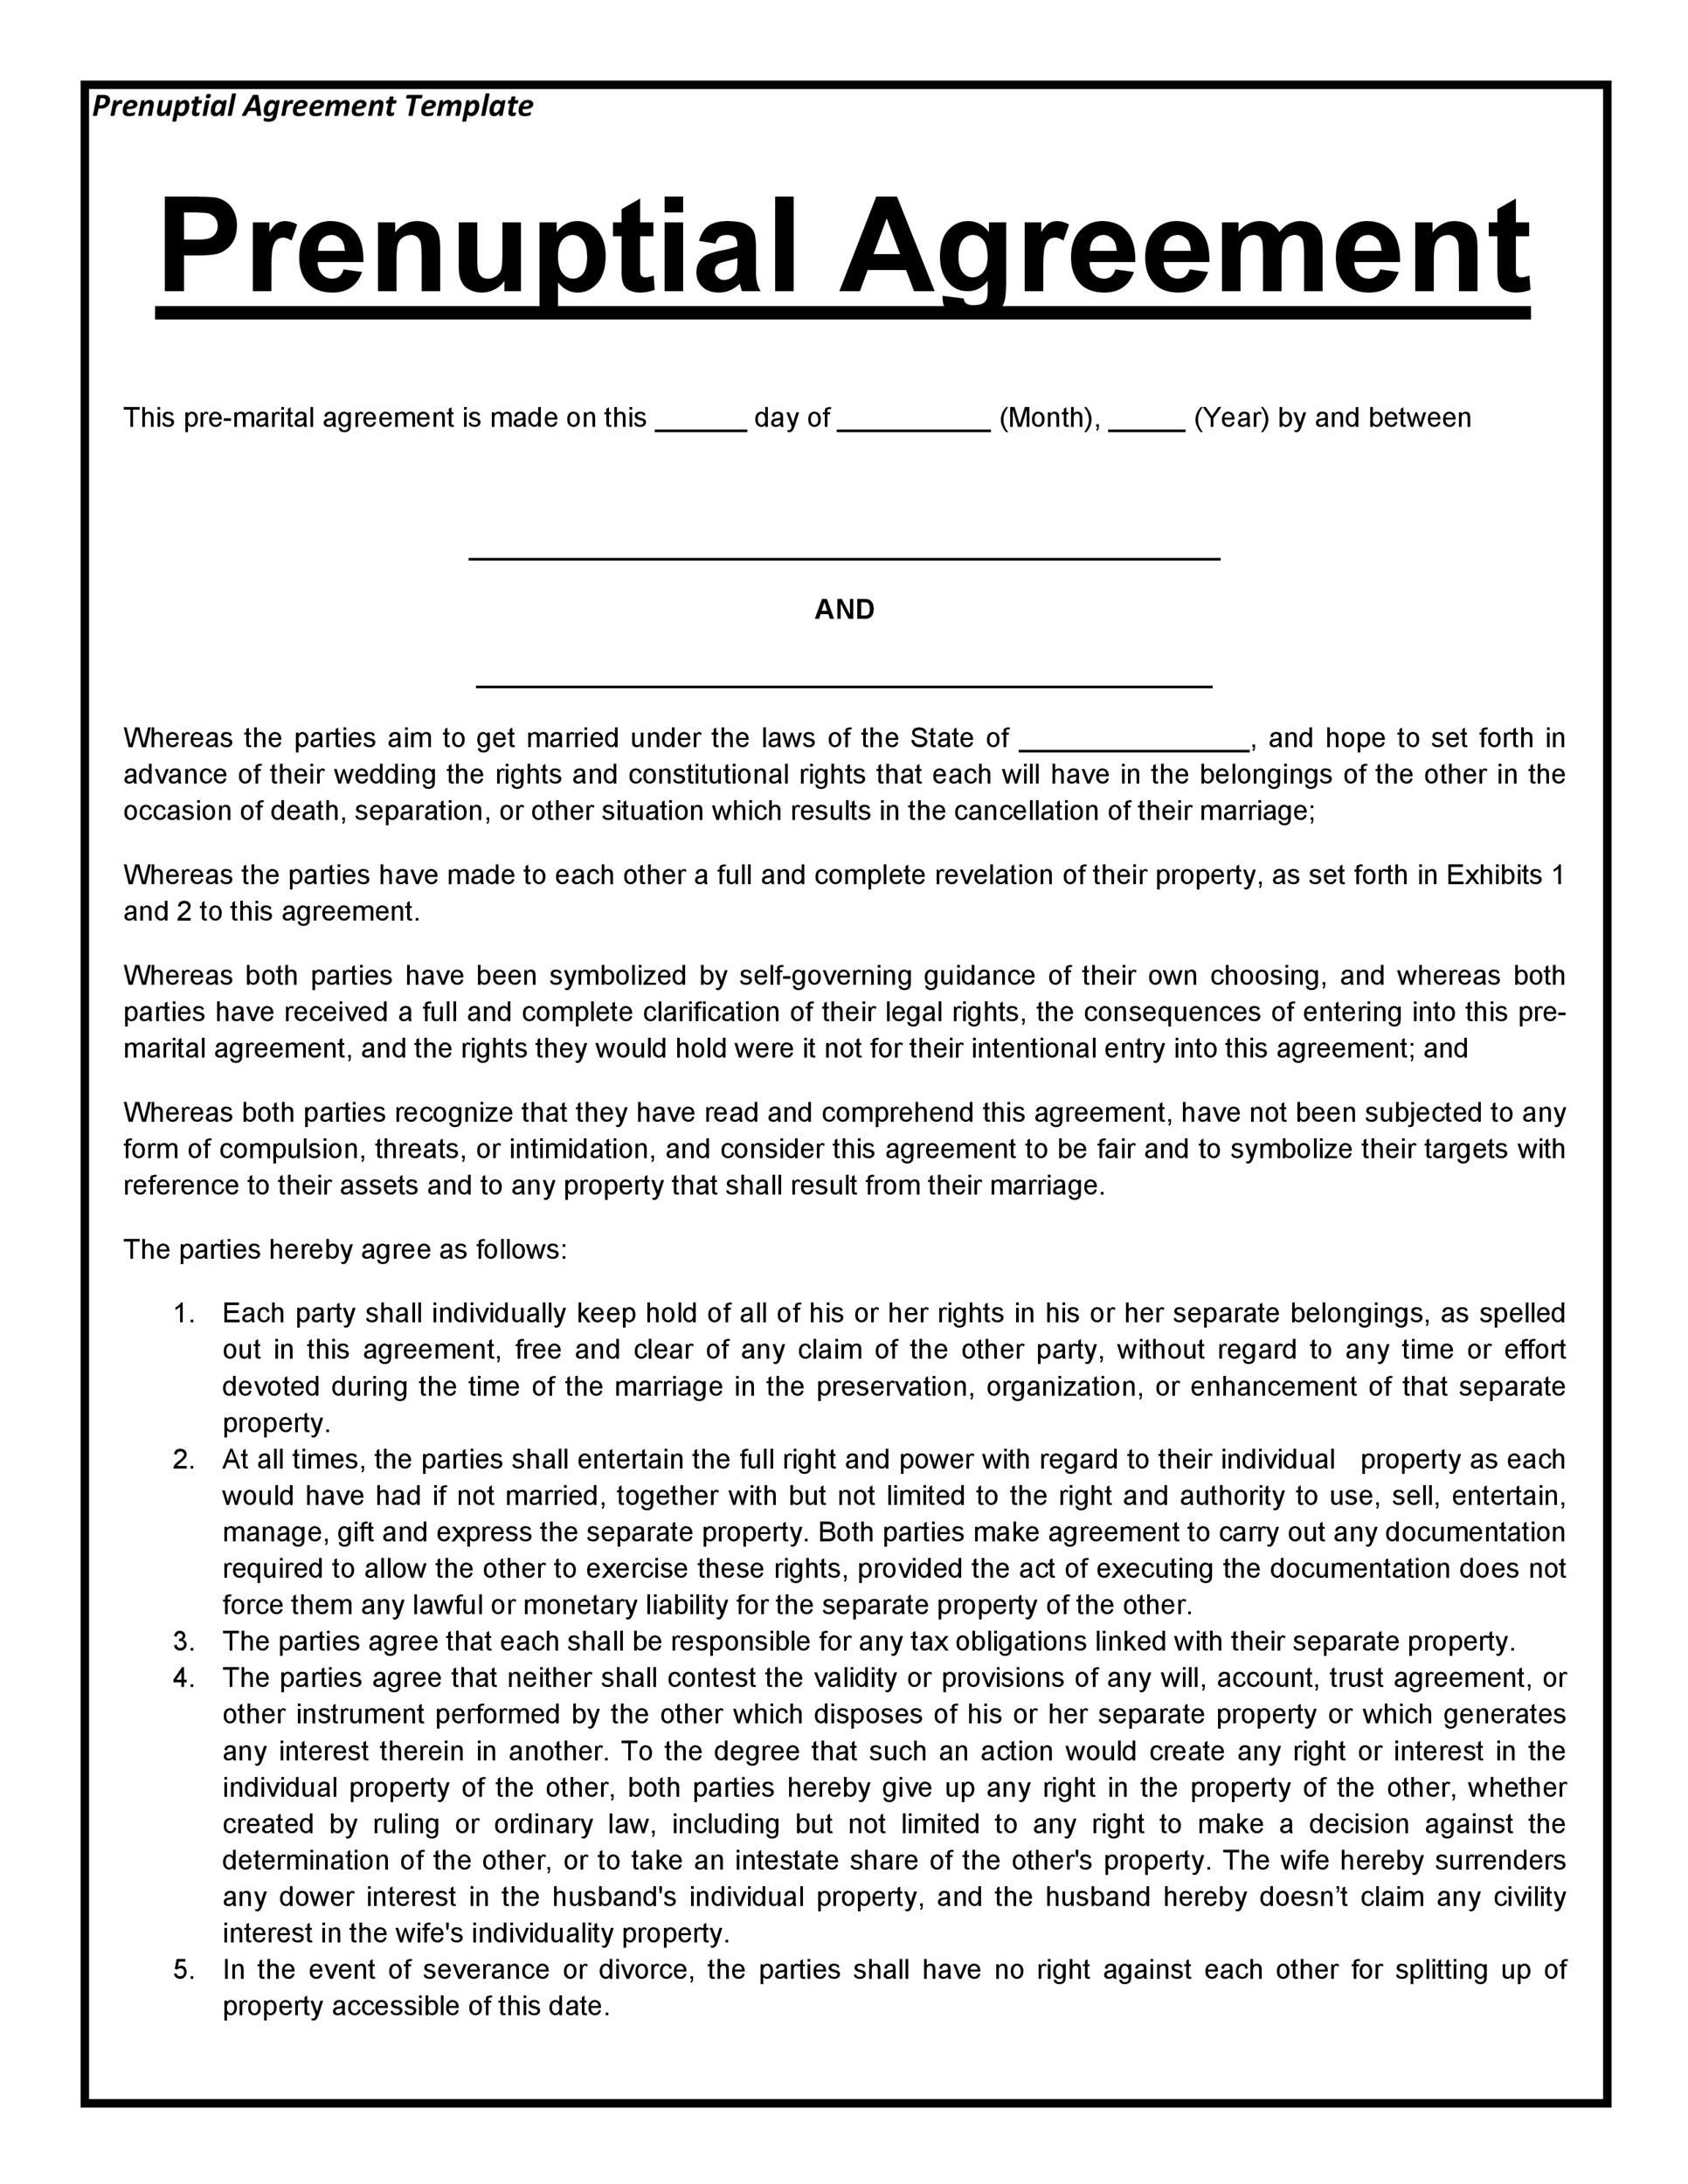 30 Prenuptial Agreement Samples Forms TemplateLab